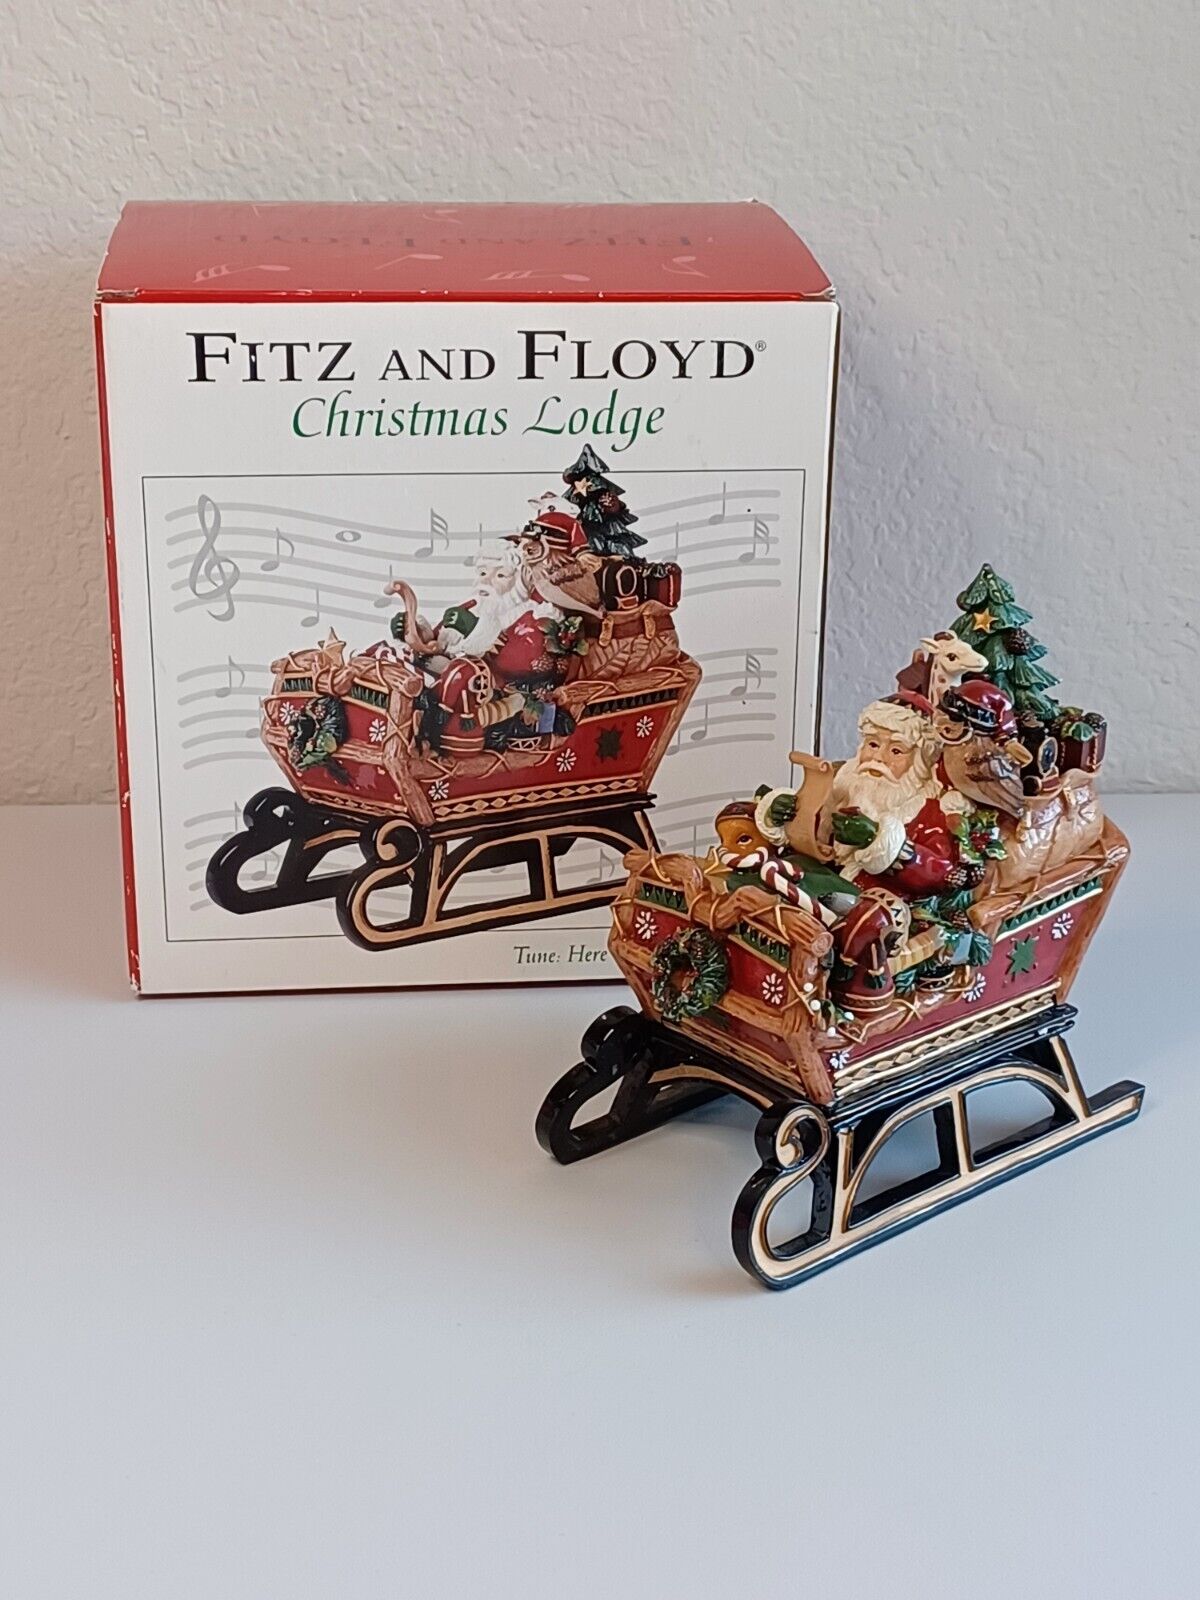 2004 FITZ & FLOYD Christmas Lodge Musical Sleigh Figurine 19/115 Preowned in Box